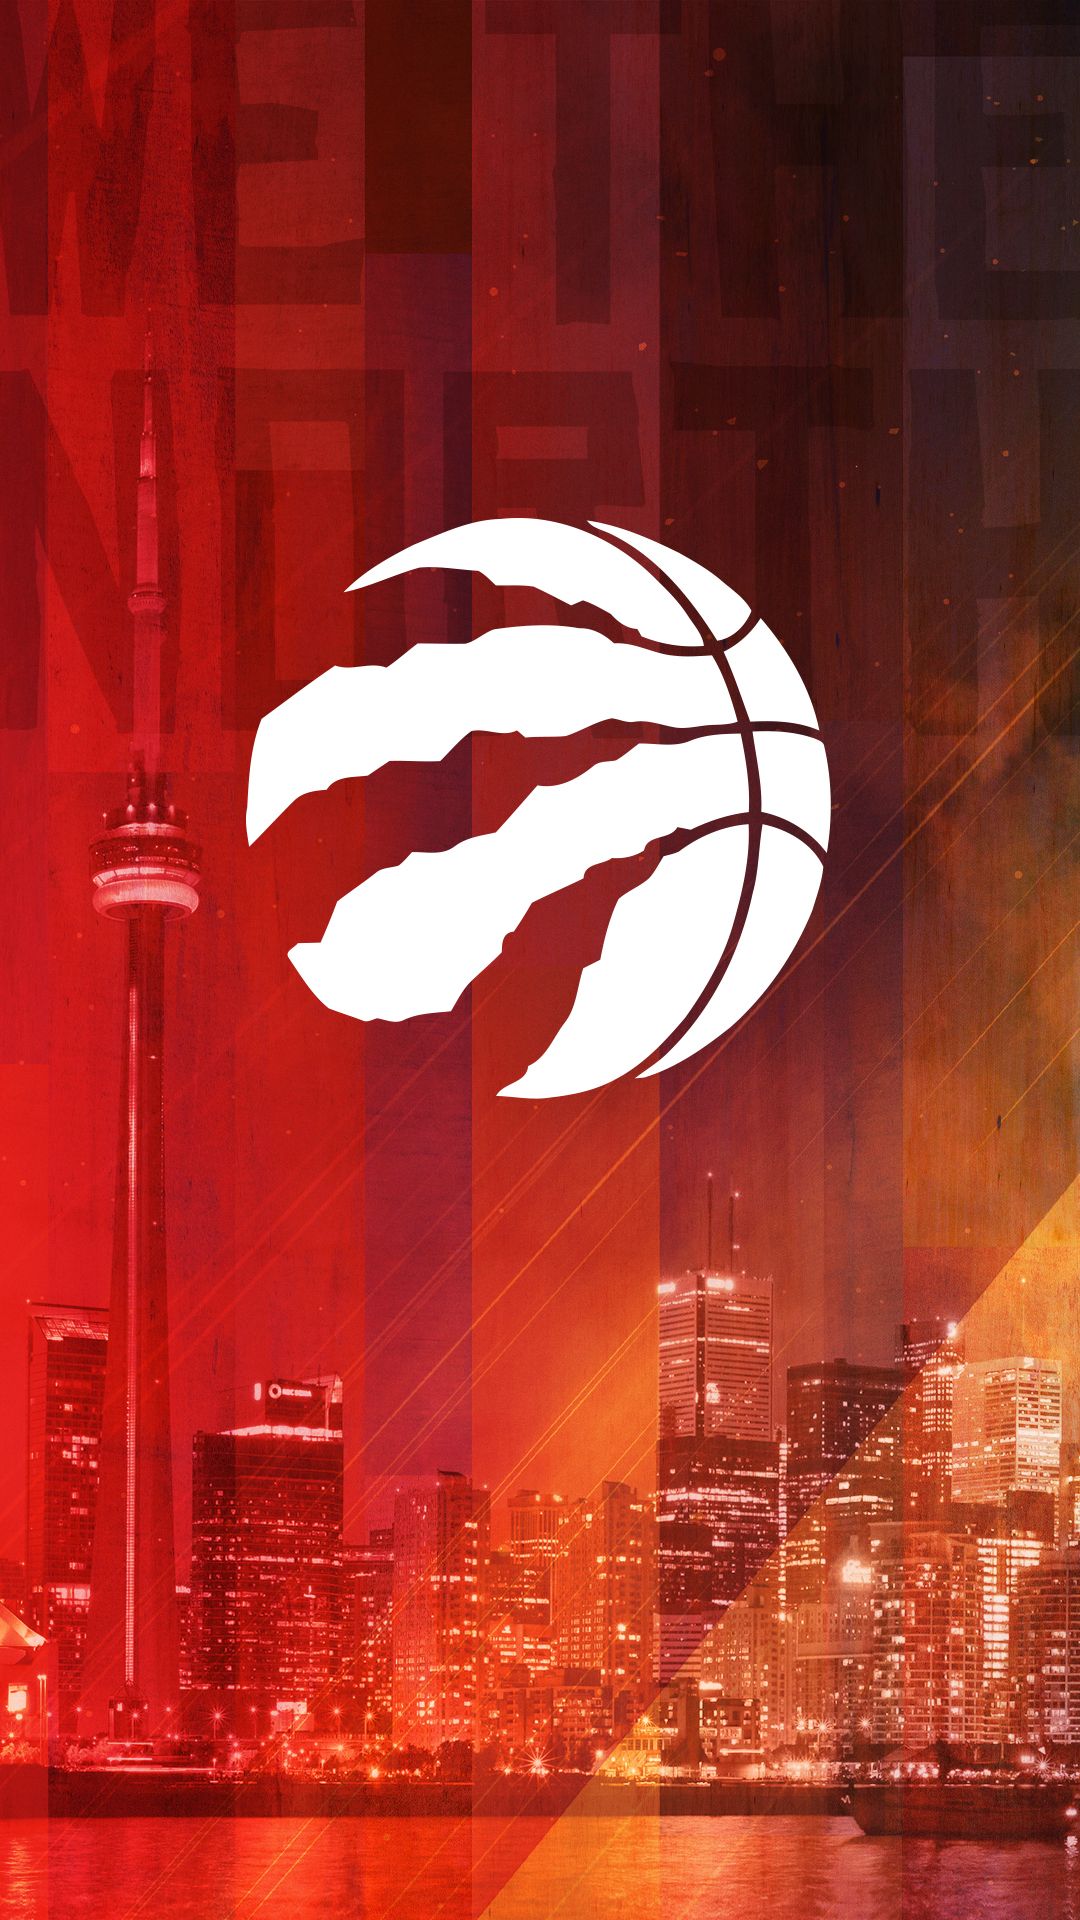 Toronto Raptors Wallpaper   Mobile New Logo   Imgur my